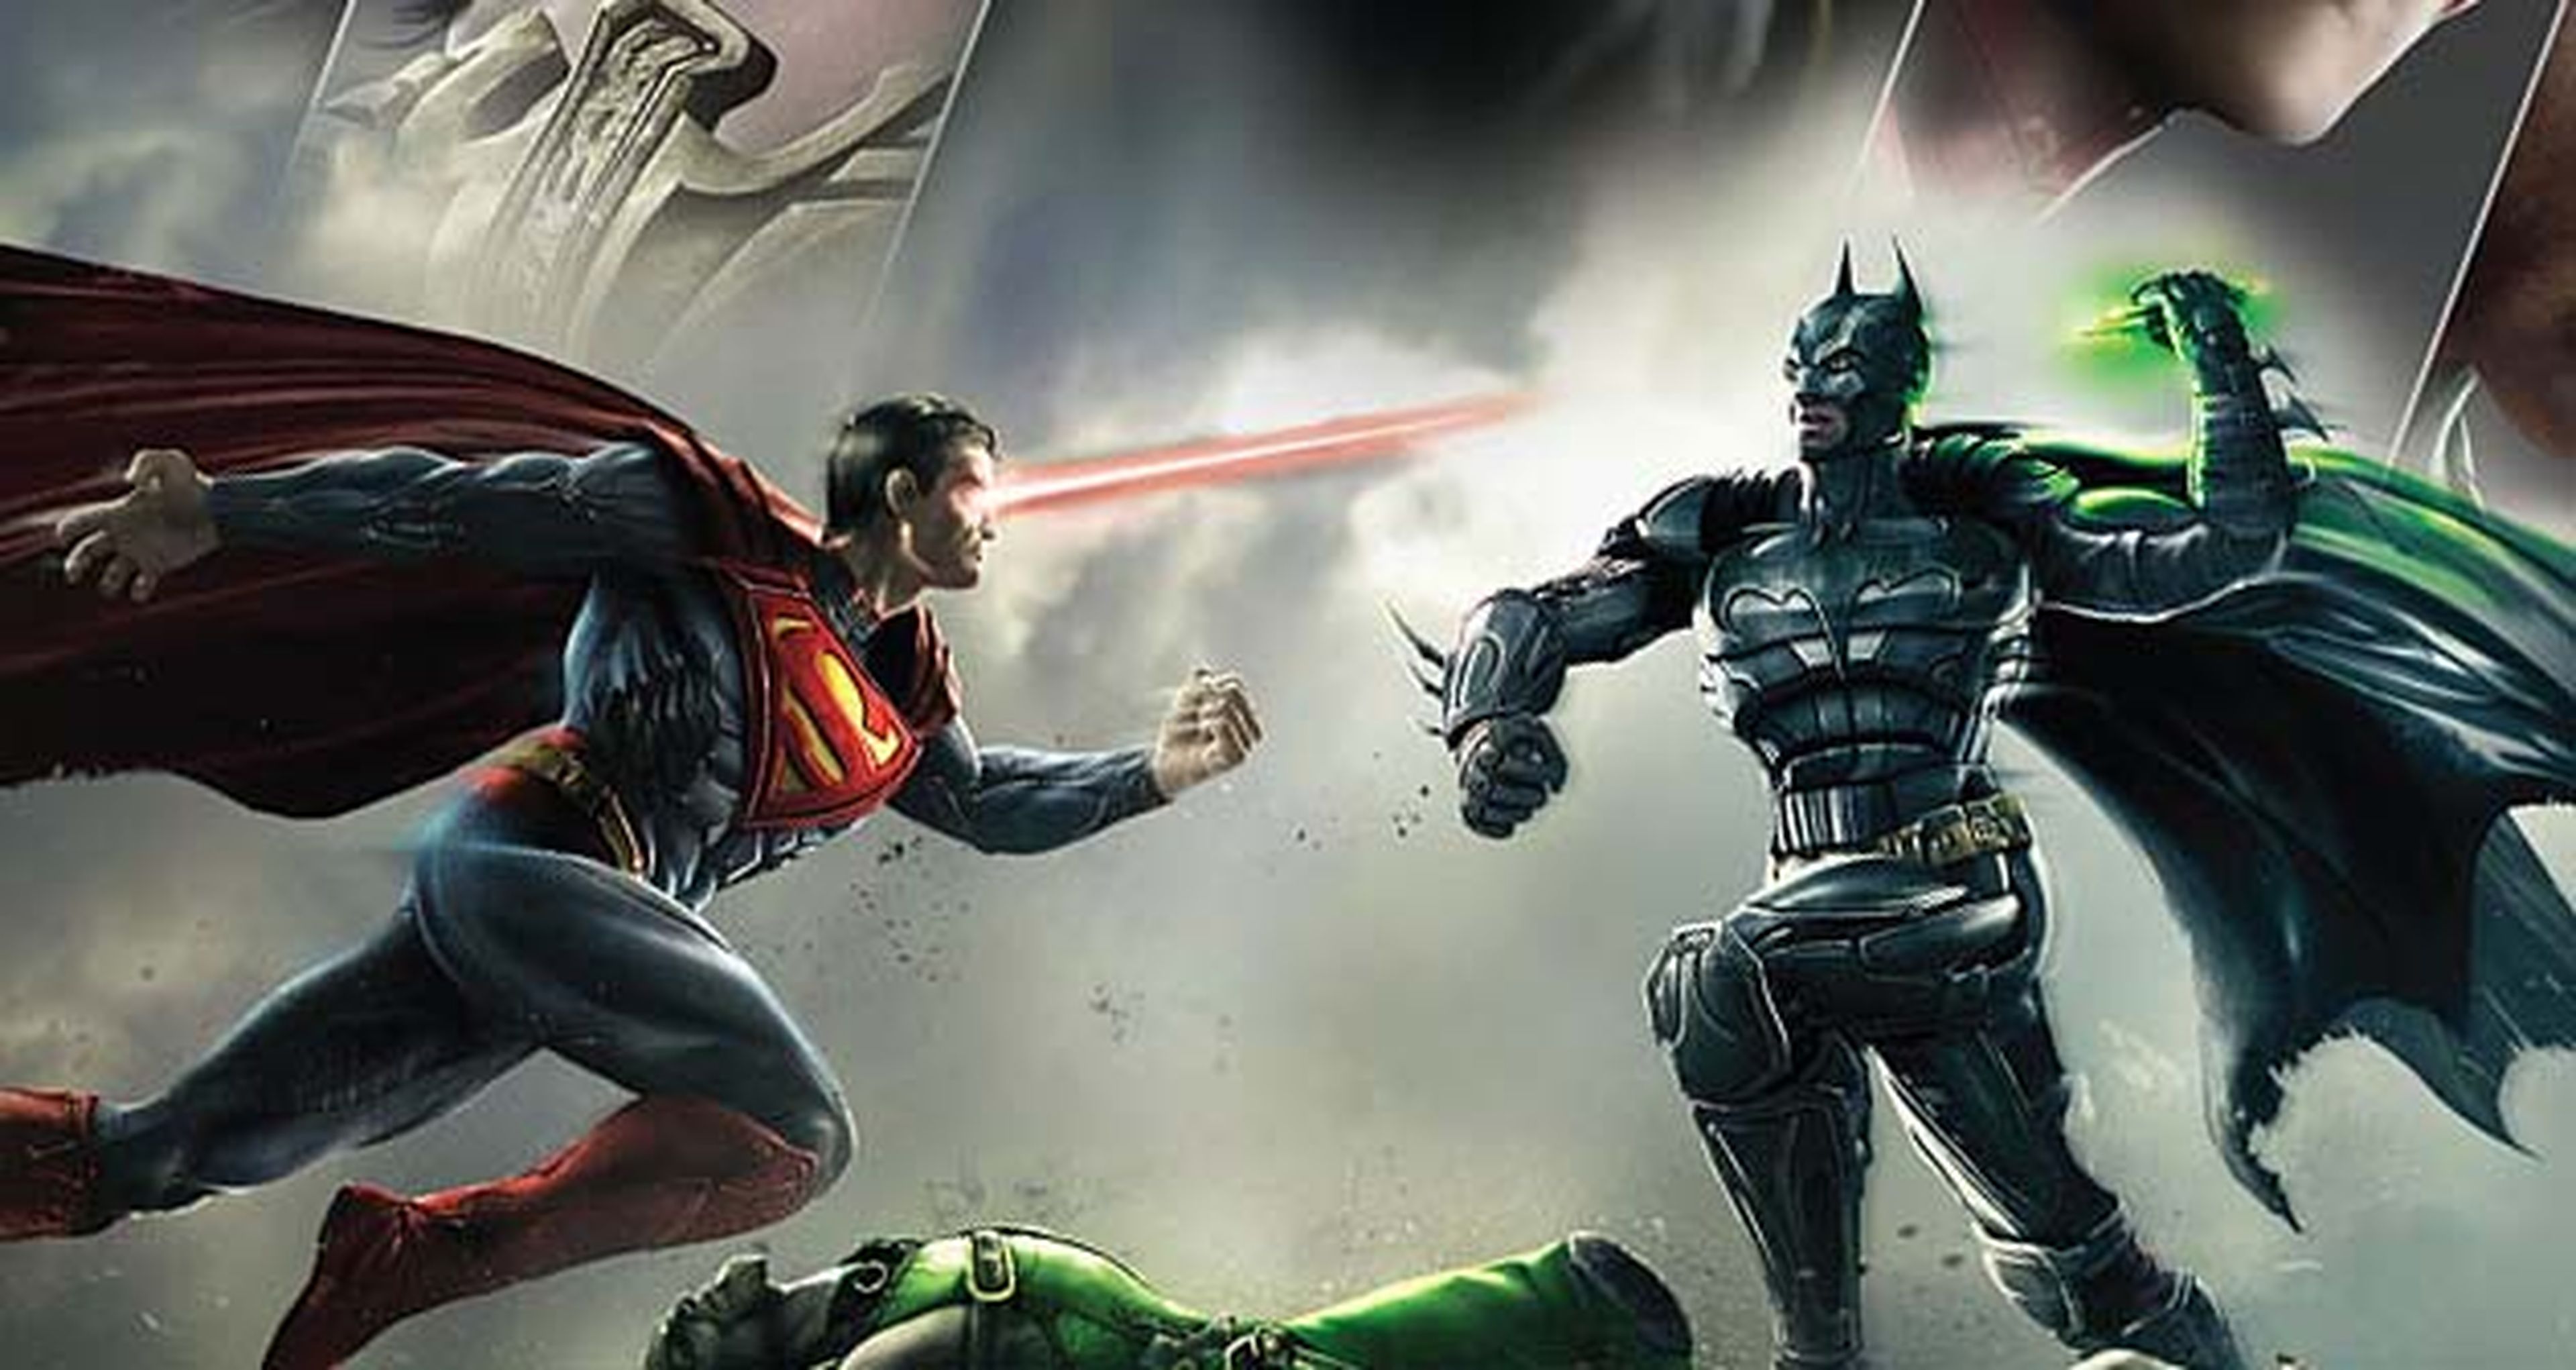 DC lanza el cómic de Injustice: Gods Among Us